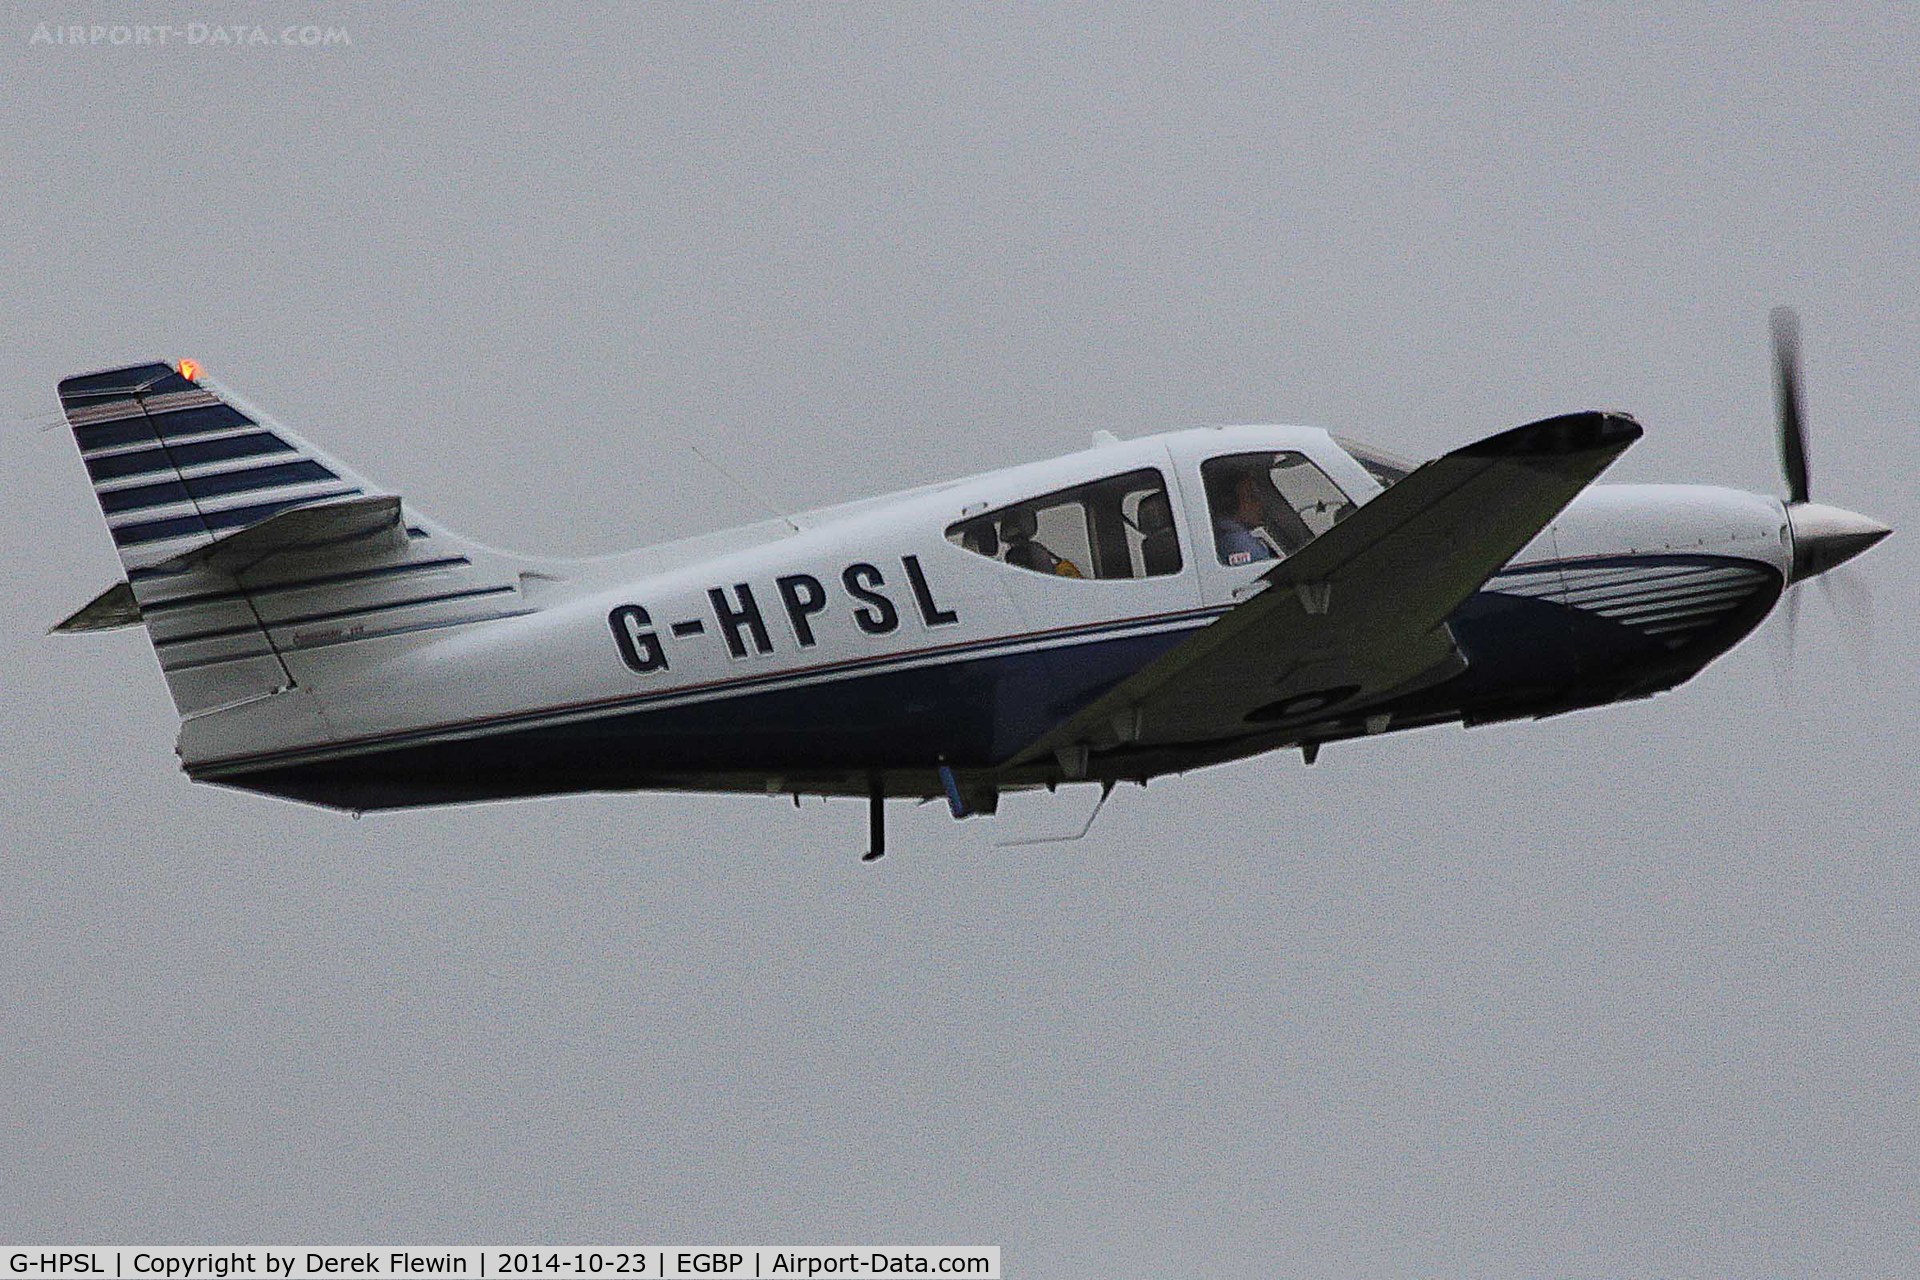 G-HPSL, 2001 Commander 114B C/N 14682, Visiting Commander, Guernsey based, previously N115KL, seen departing runway 26 at EGBP.